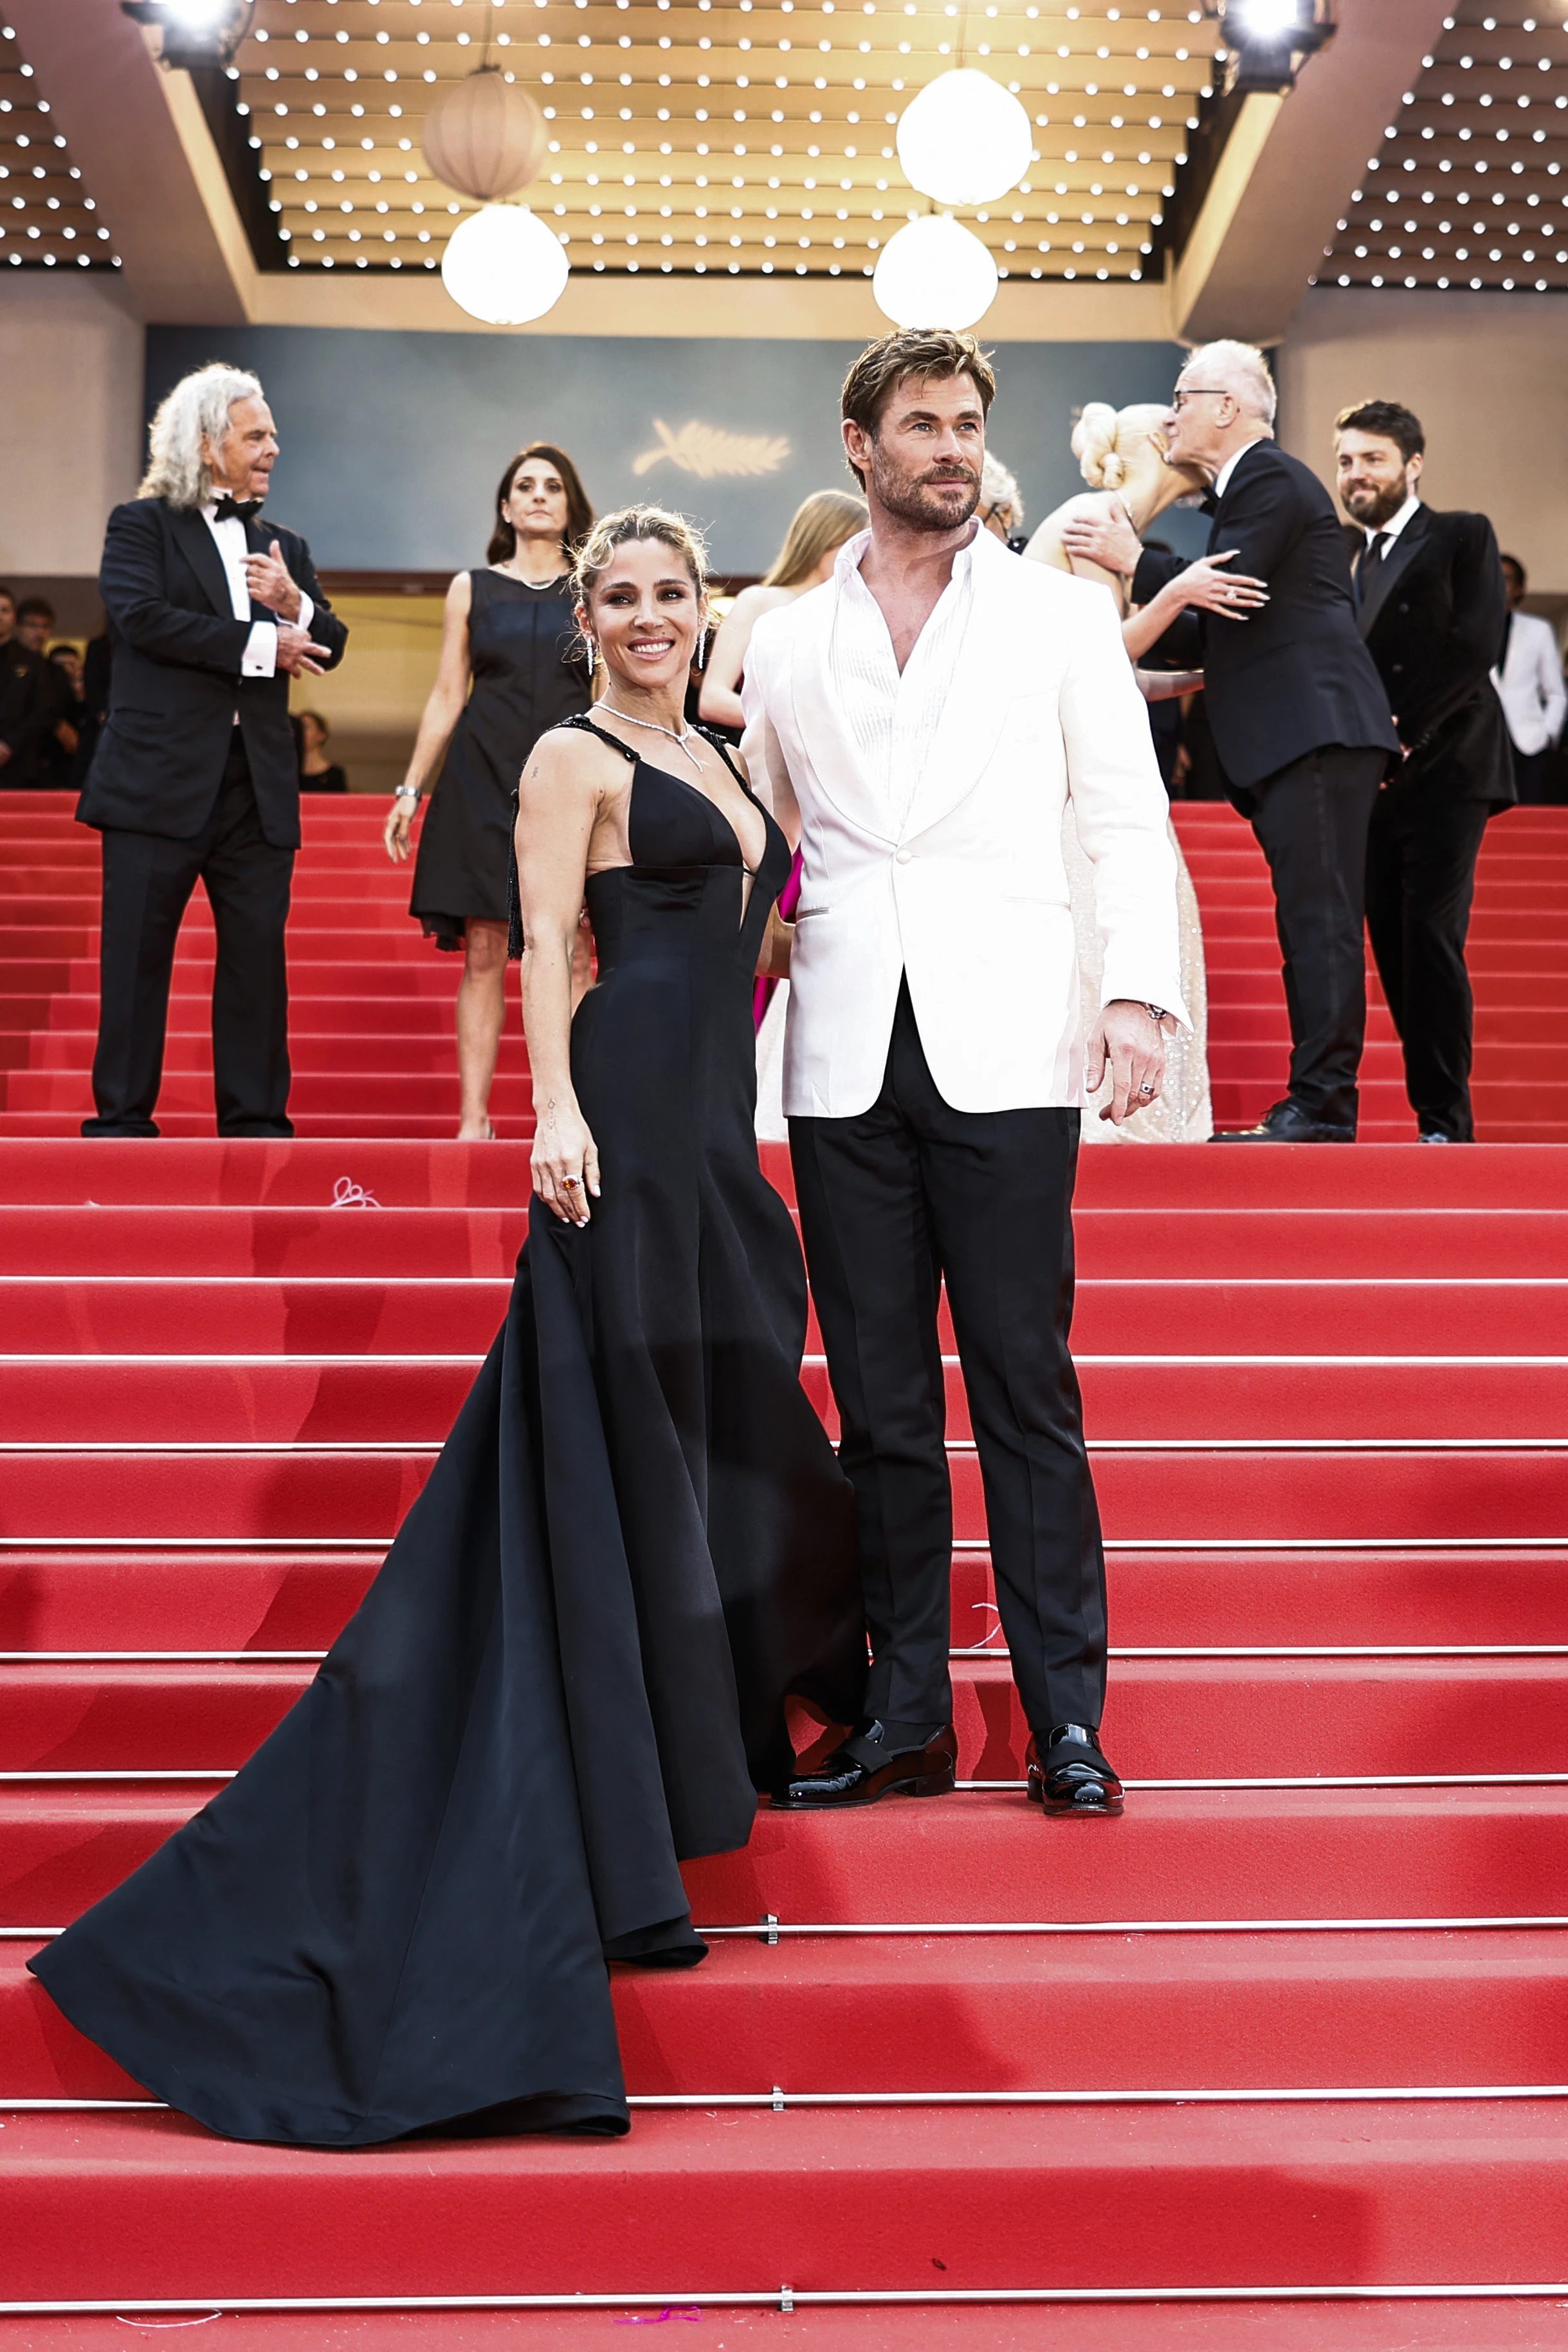 Chris Hemsworth and Elsa Pataky